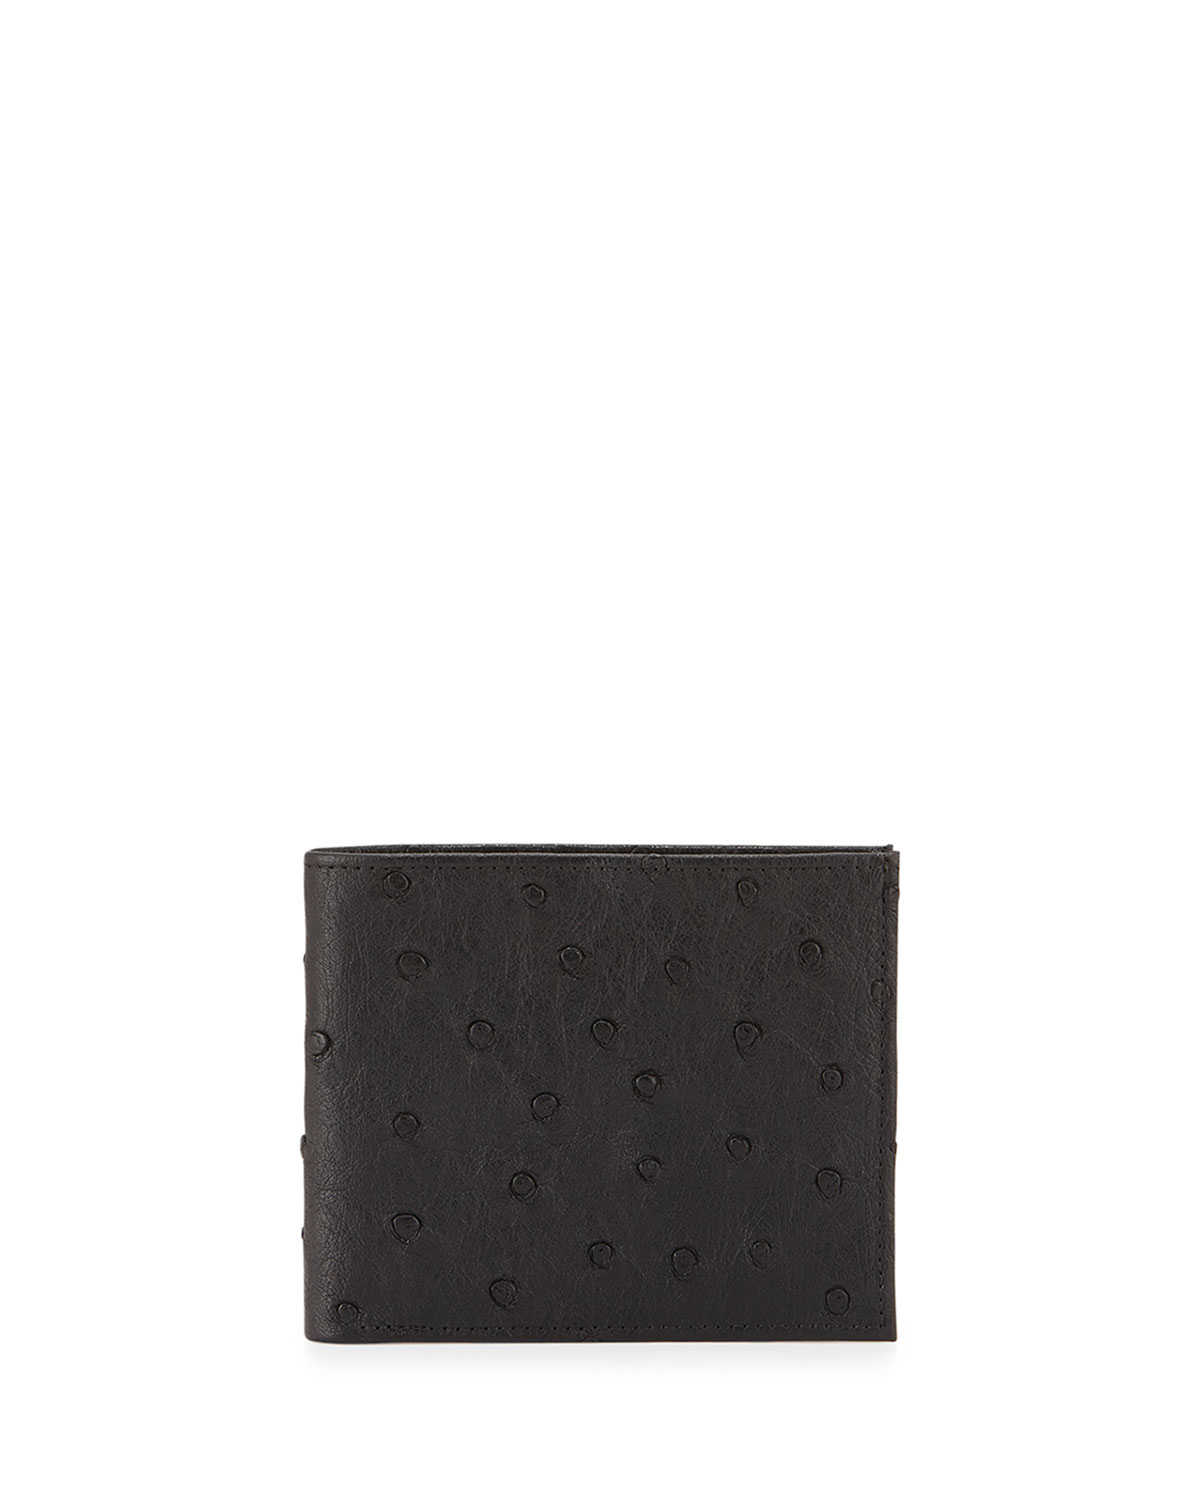 Neiman marcus Ostrich Bi-fold Wallet in Brown for Men | Lyst